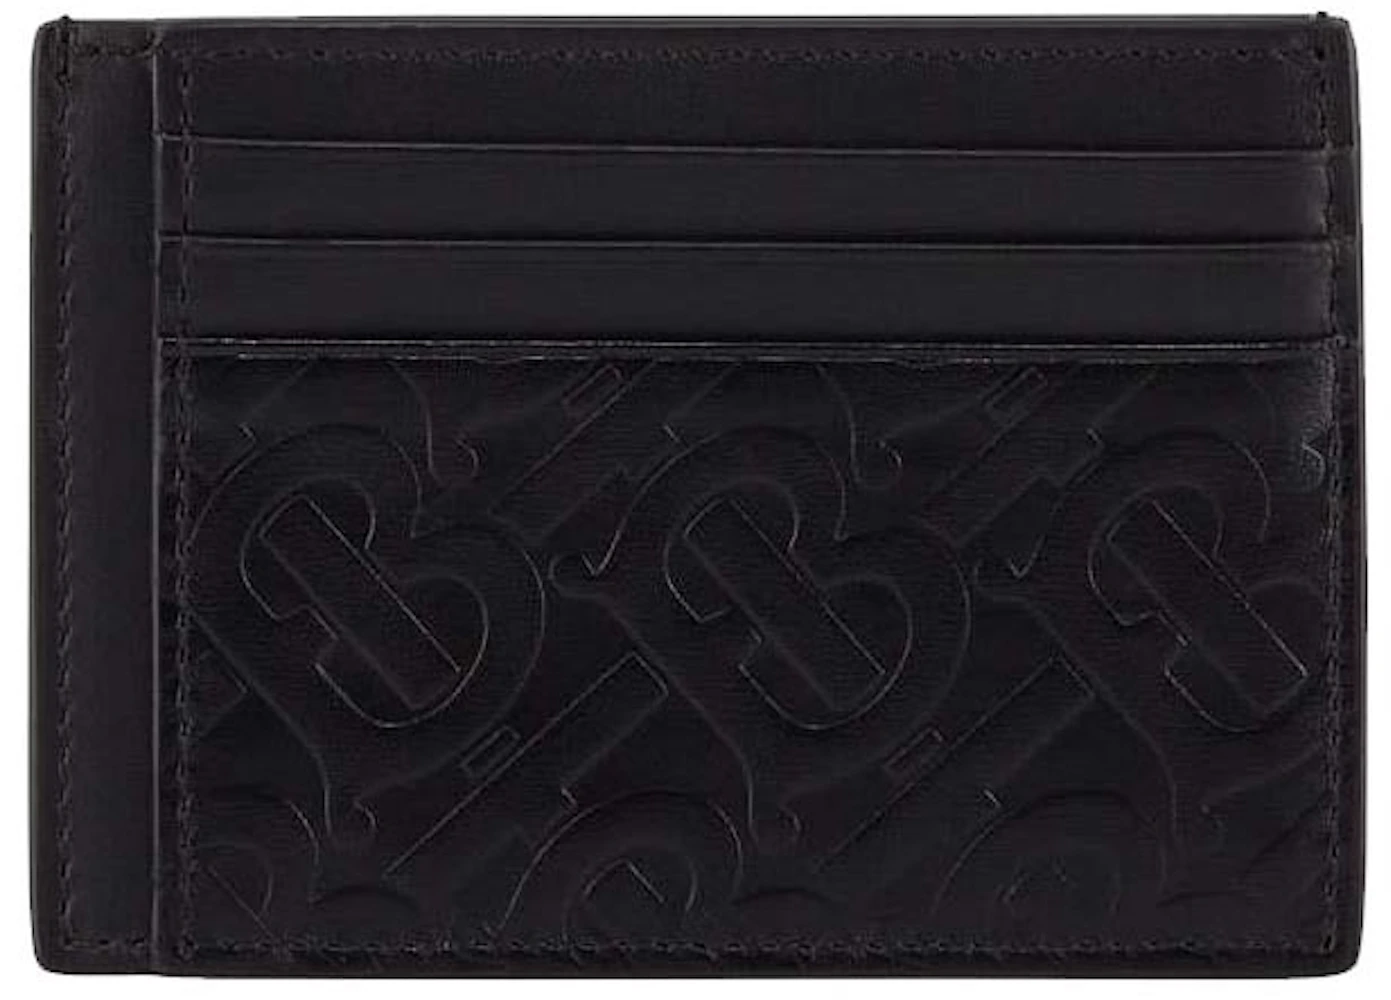 Burberry Monogram Leather Card Case 6 Slot Black in Calfskin - US